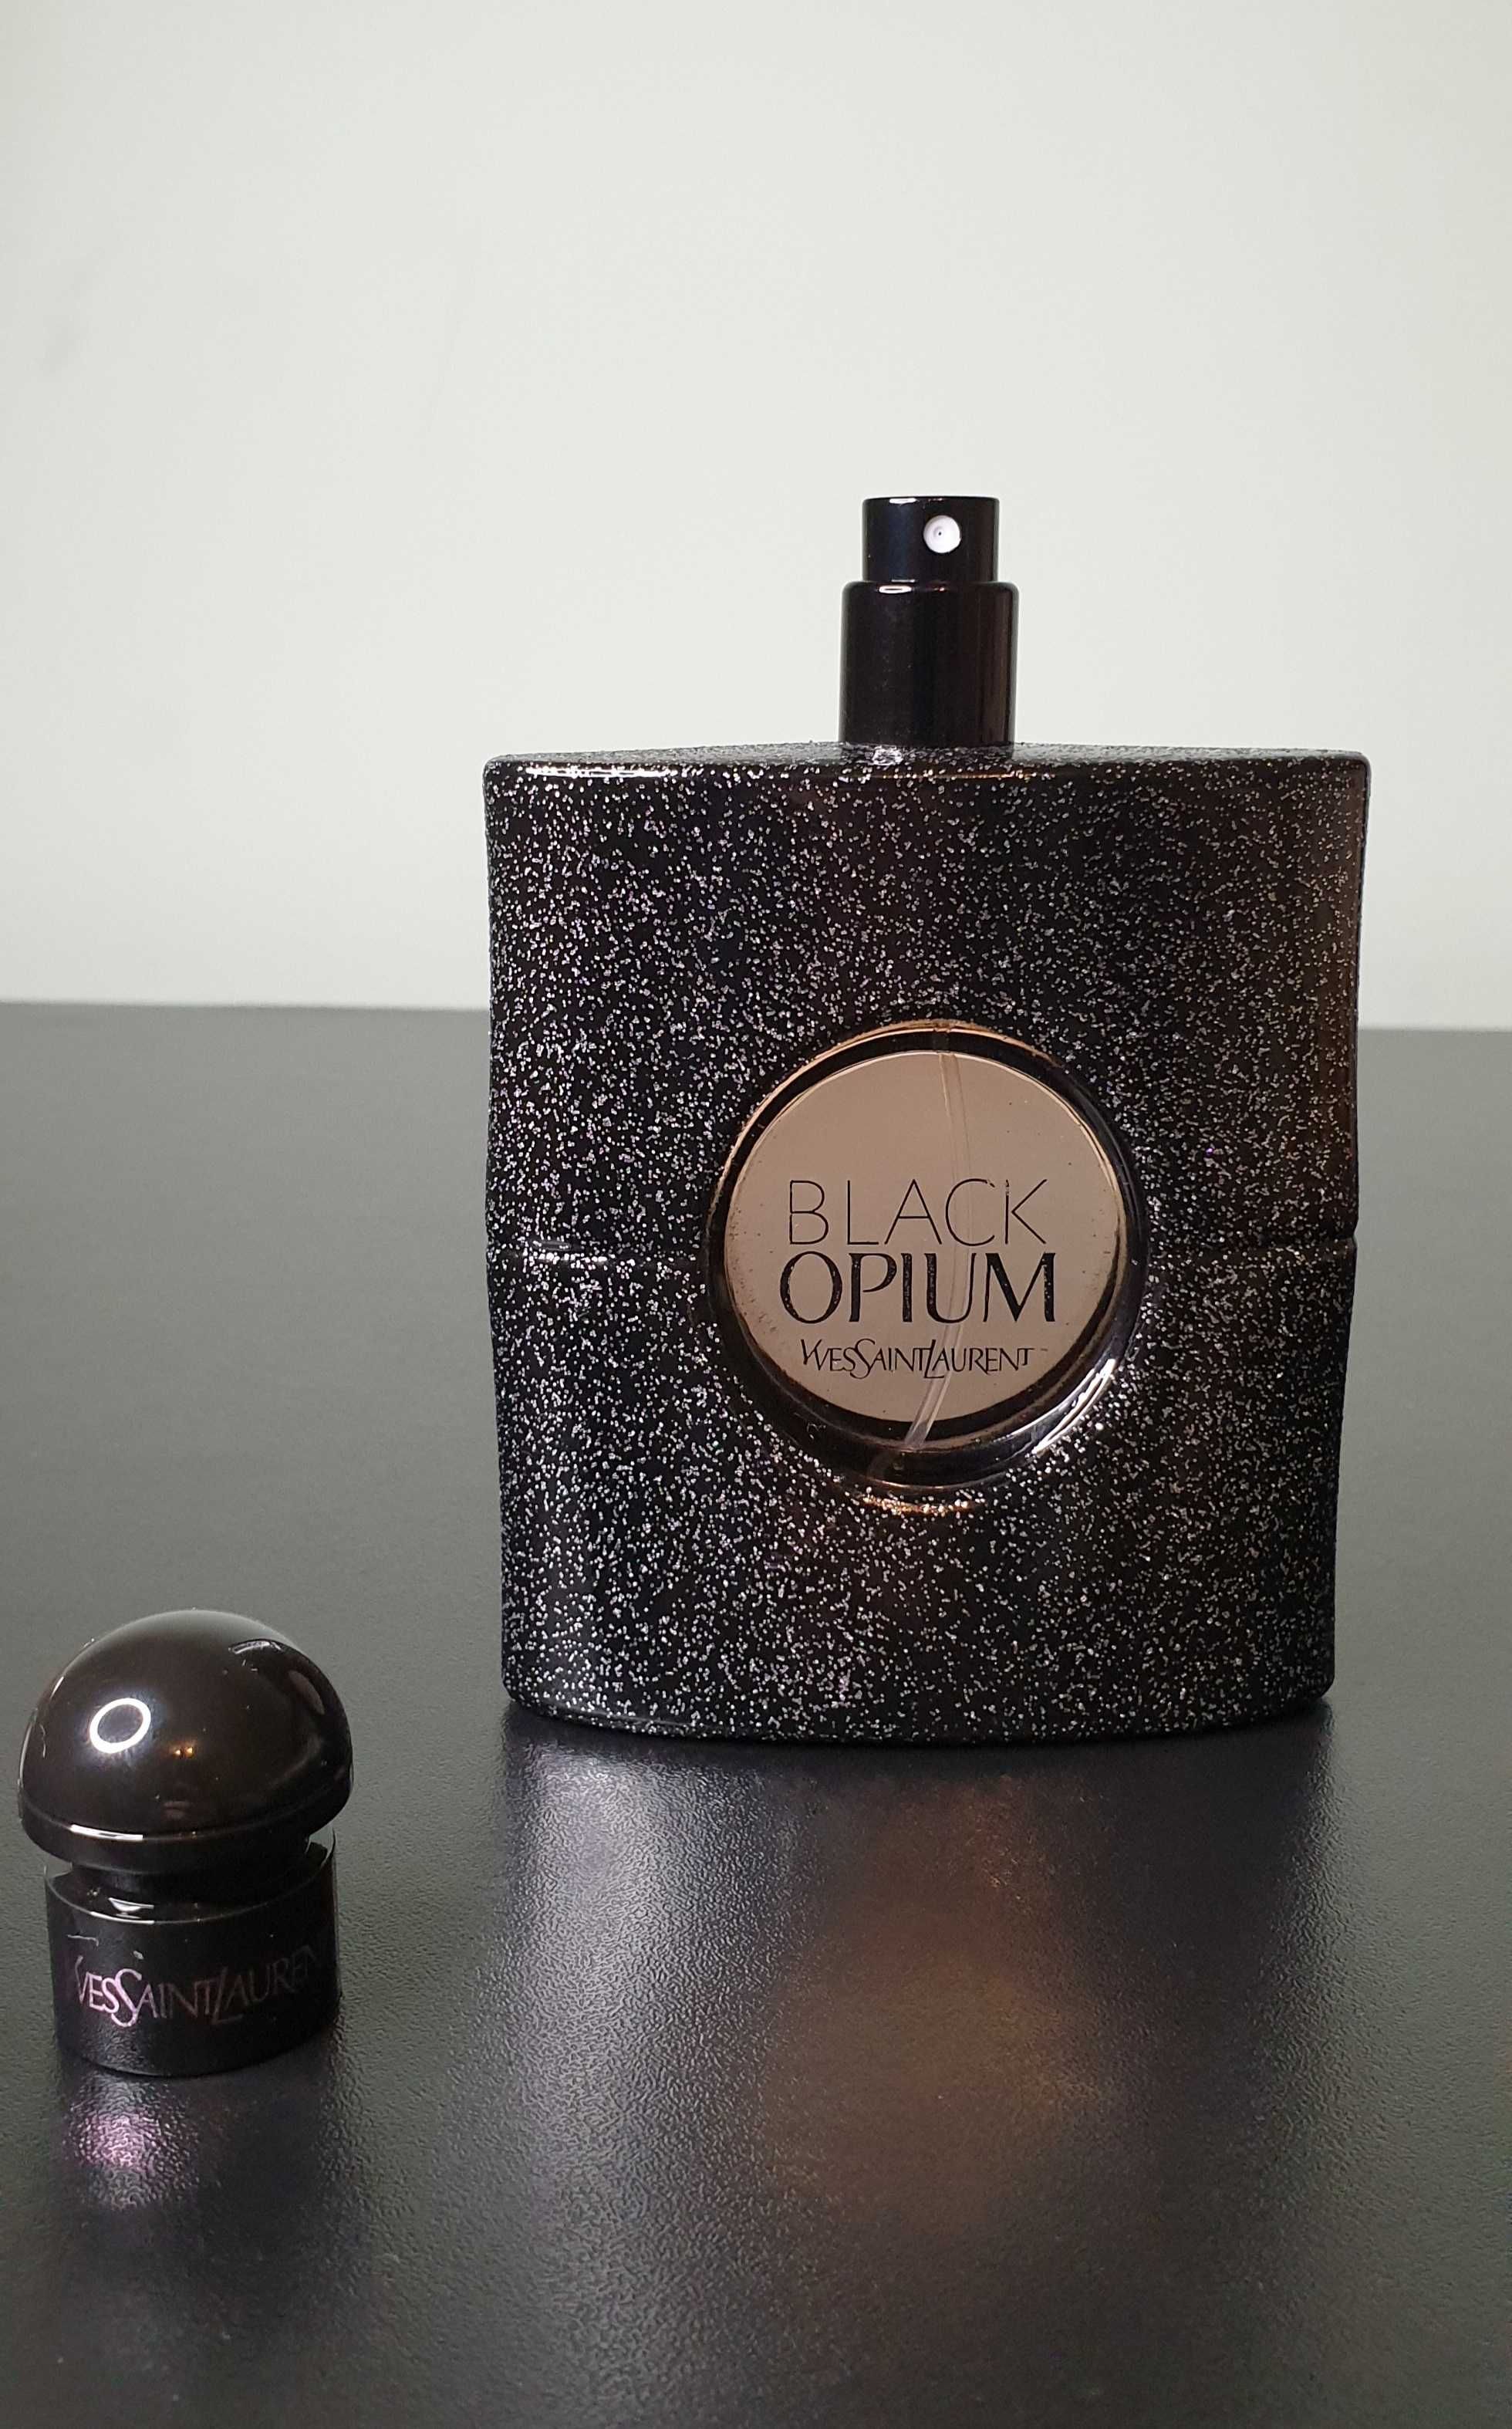 Black Opium YVES SAINT LAURENT - 90ml.